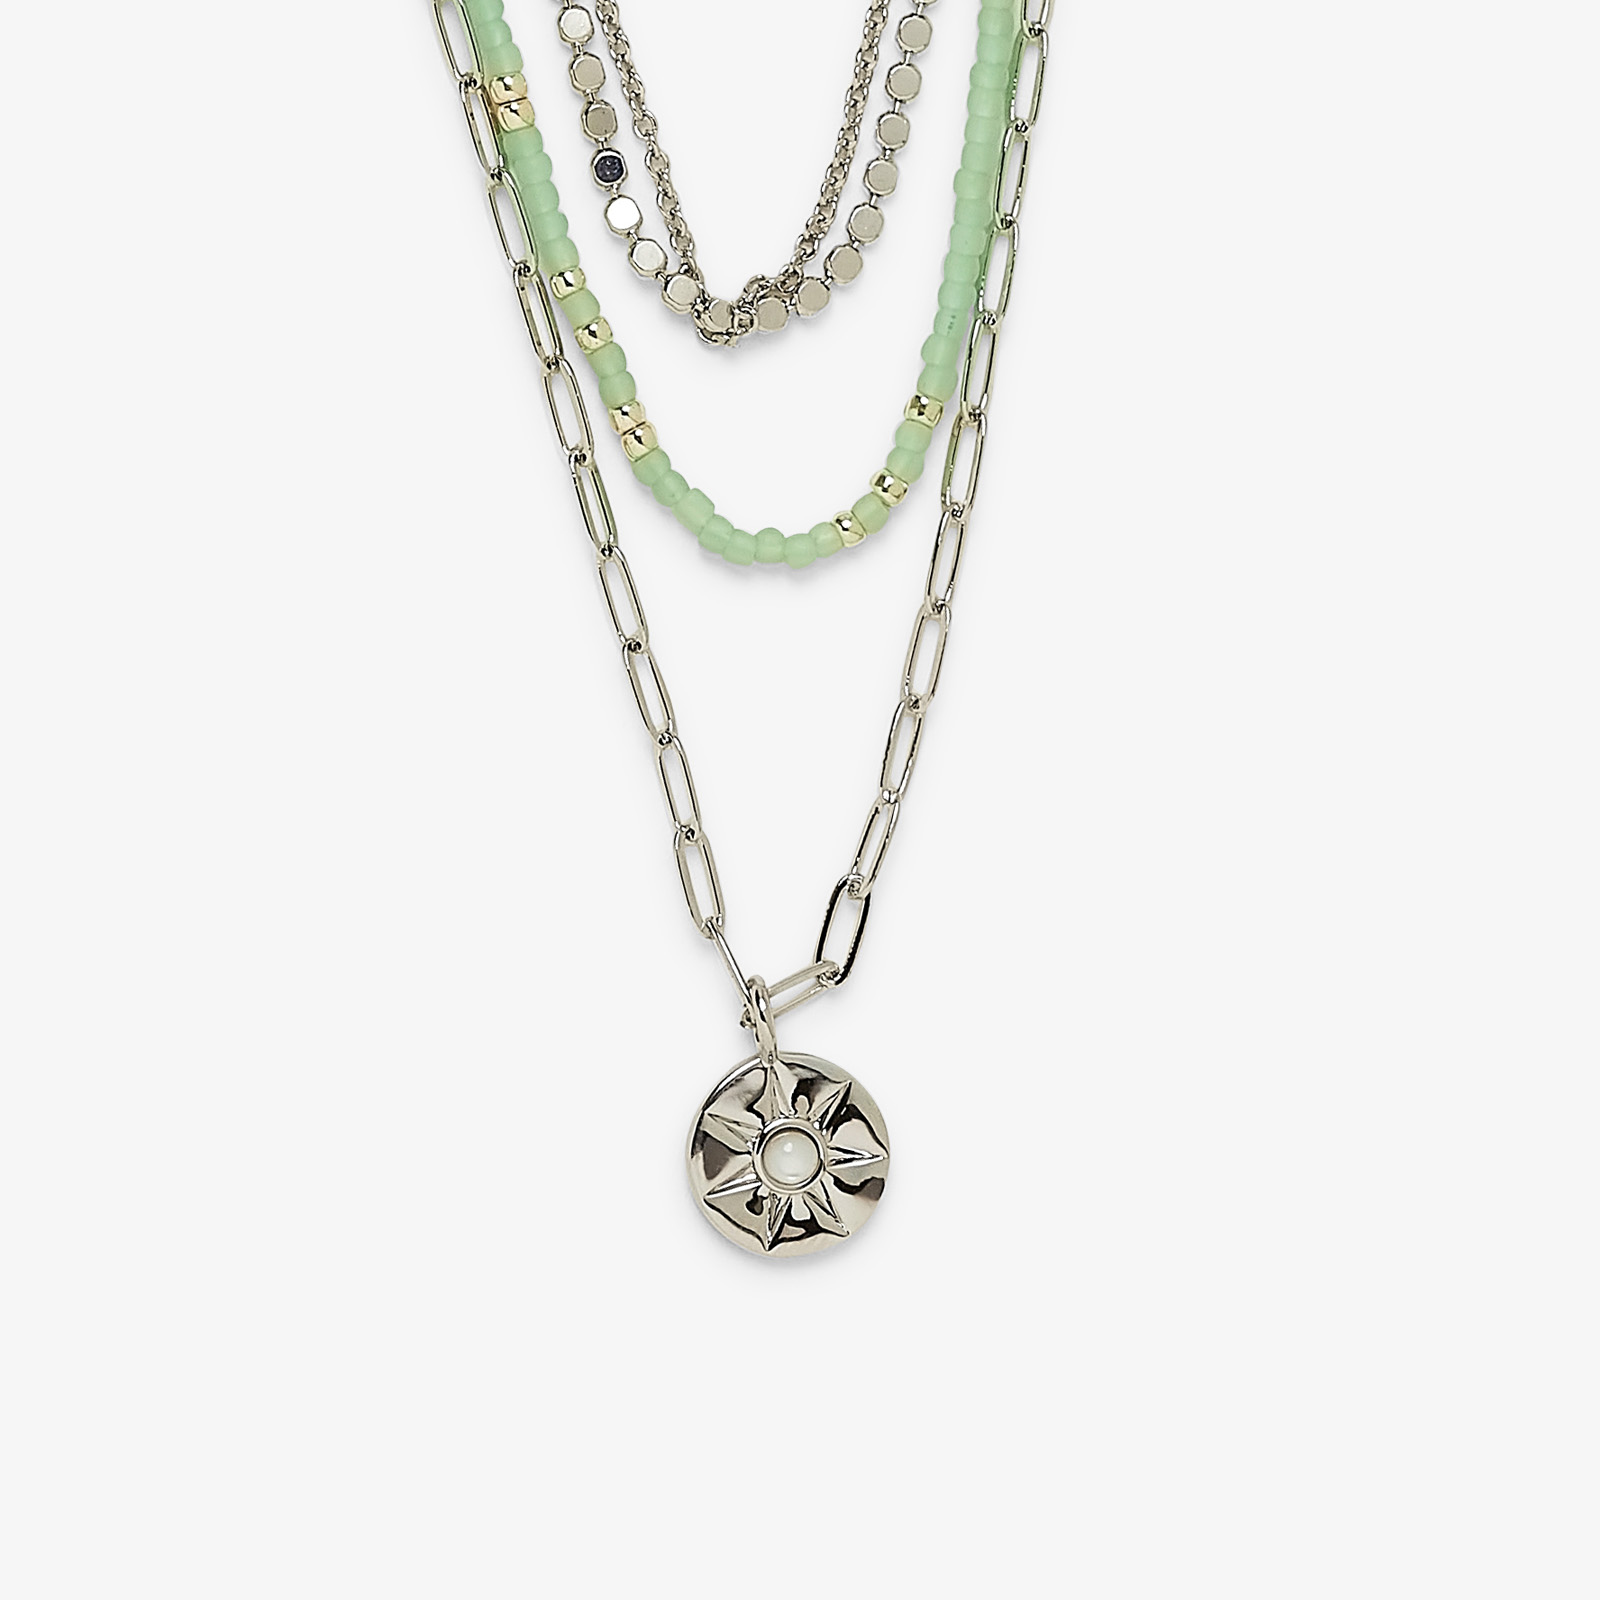 Kendra Scott Opal White Fashion Jewelry | eBay